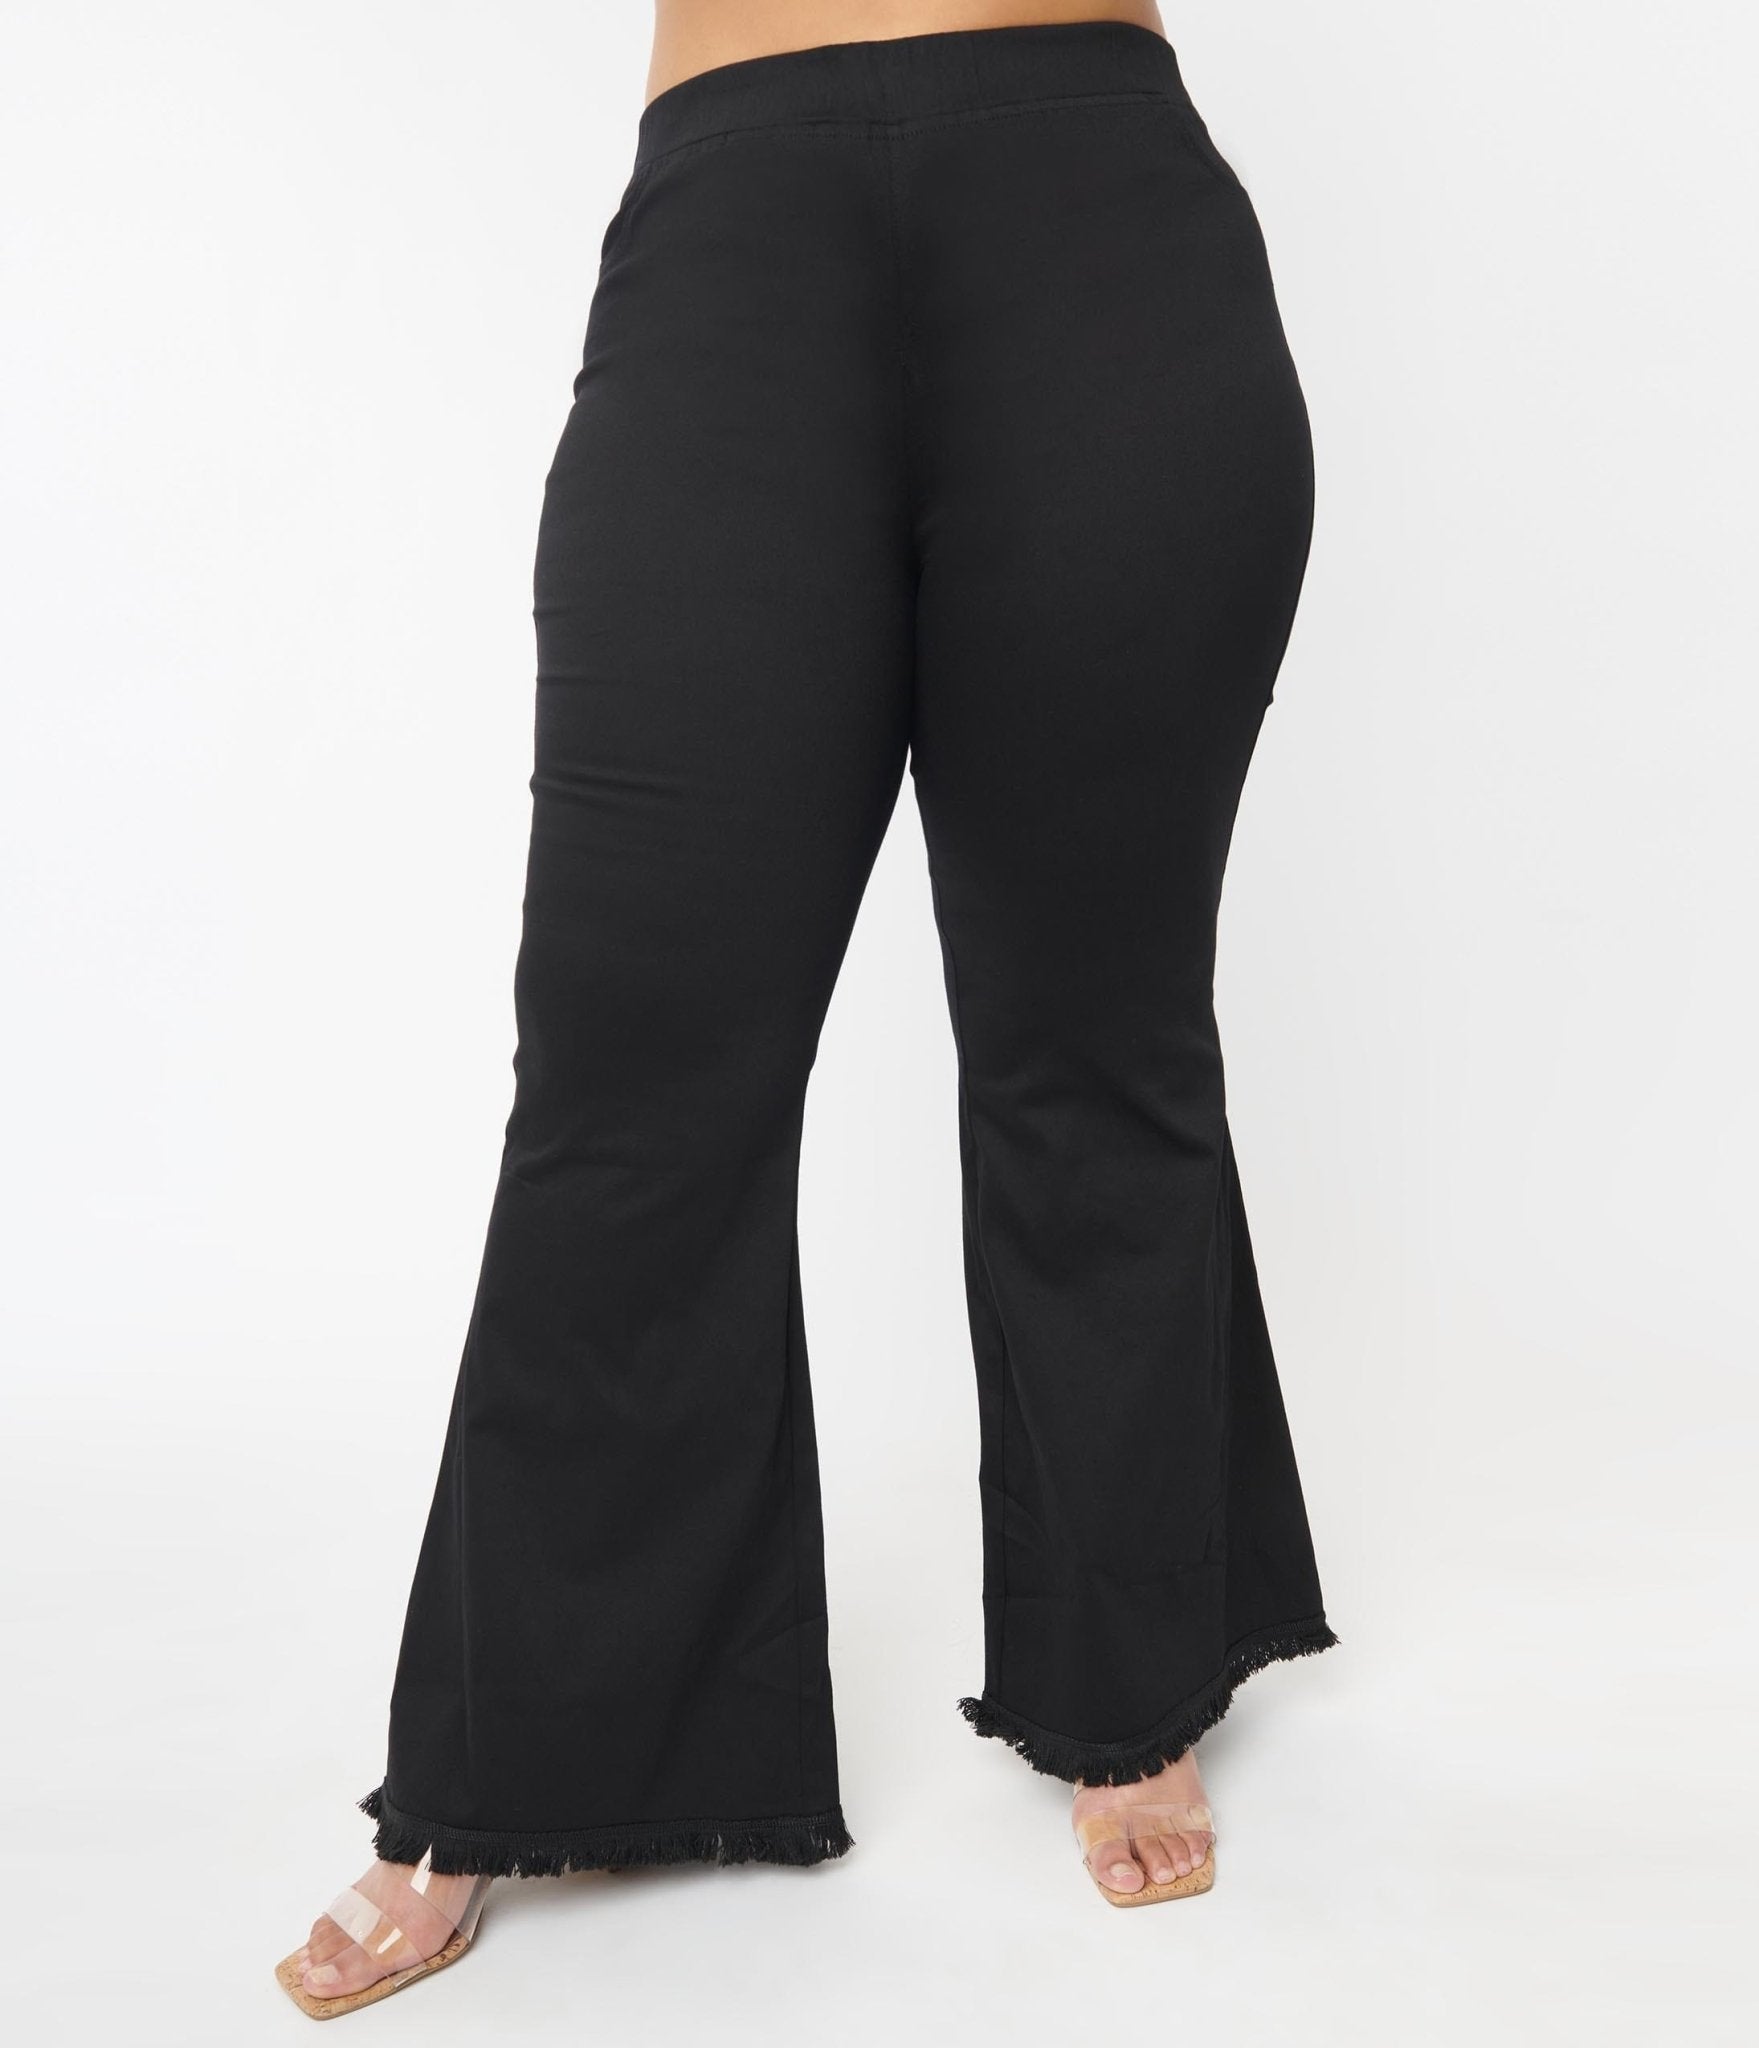 REPUBLIC OF CURVES Black Bell Pants|Big Bell Pants|Bell Pants|Formal  Pants|Women Stylish Pants|Flared Pants|Office Pants|Designer Pants|Bell